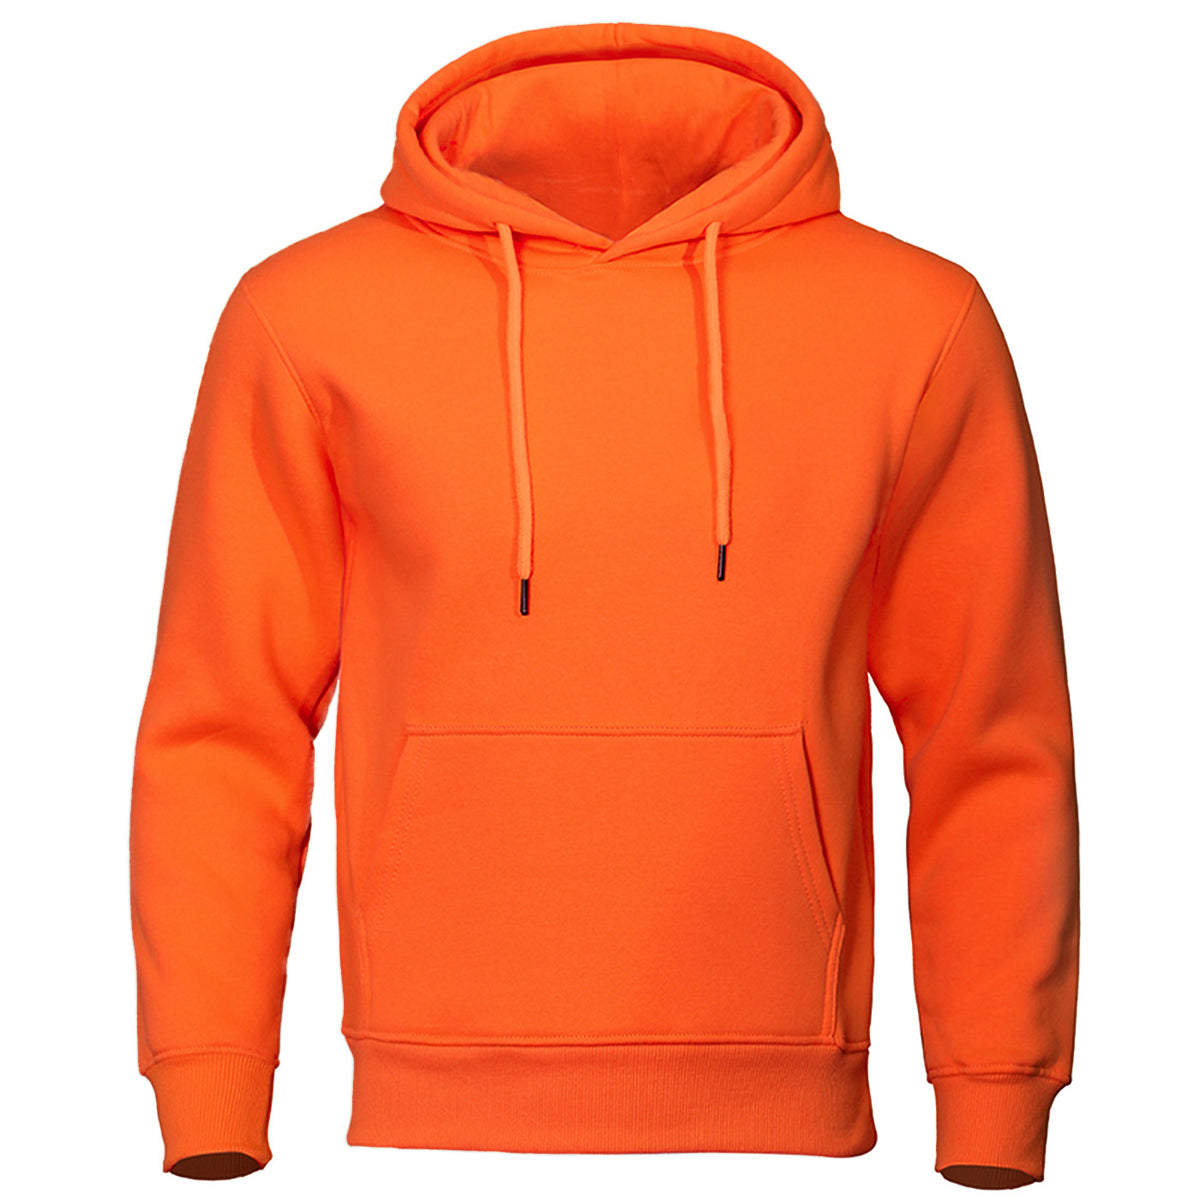 Solid Color Pullover Sweatshirt Spring Fashion Fleece Unisex Hoodie